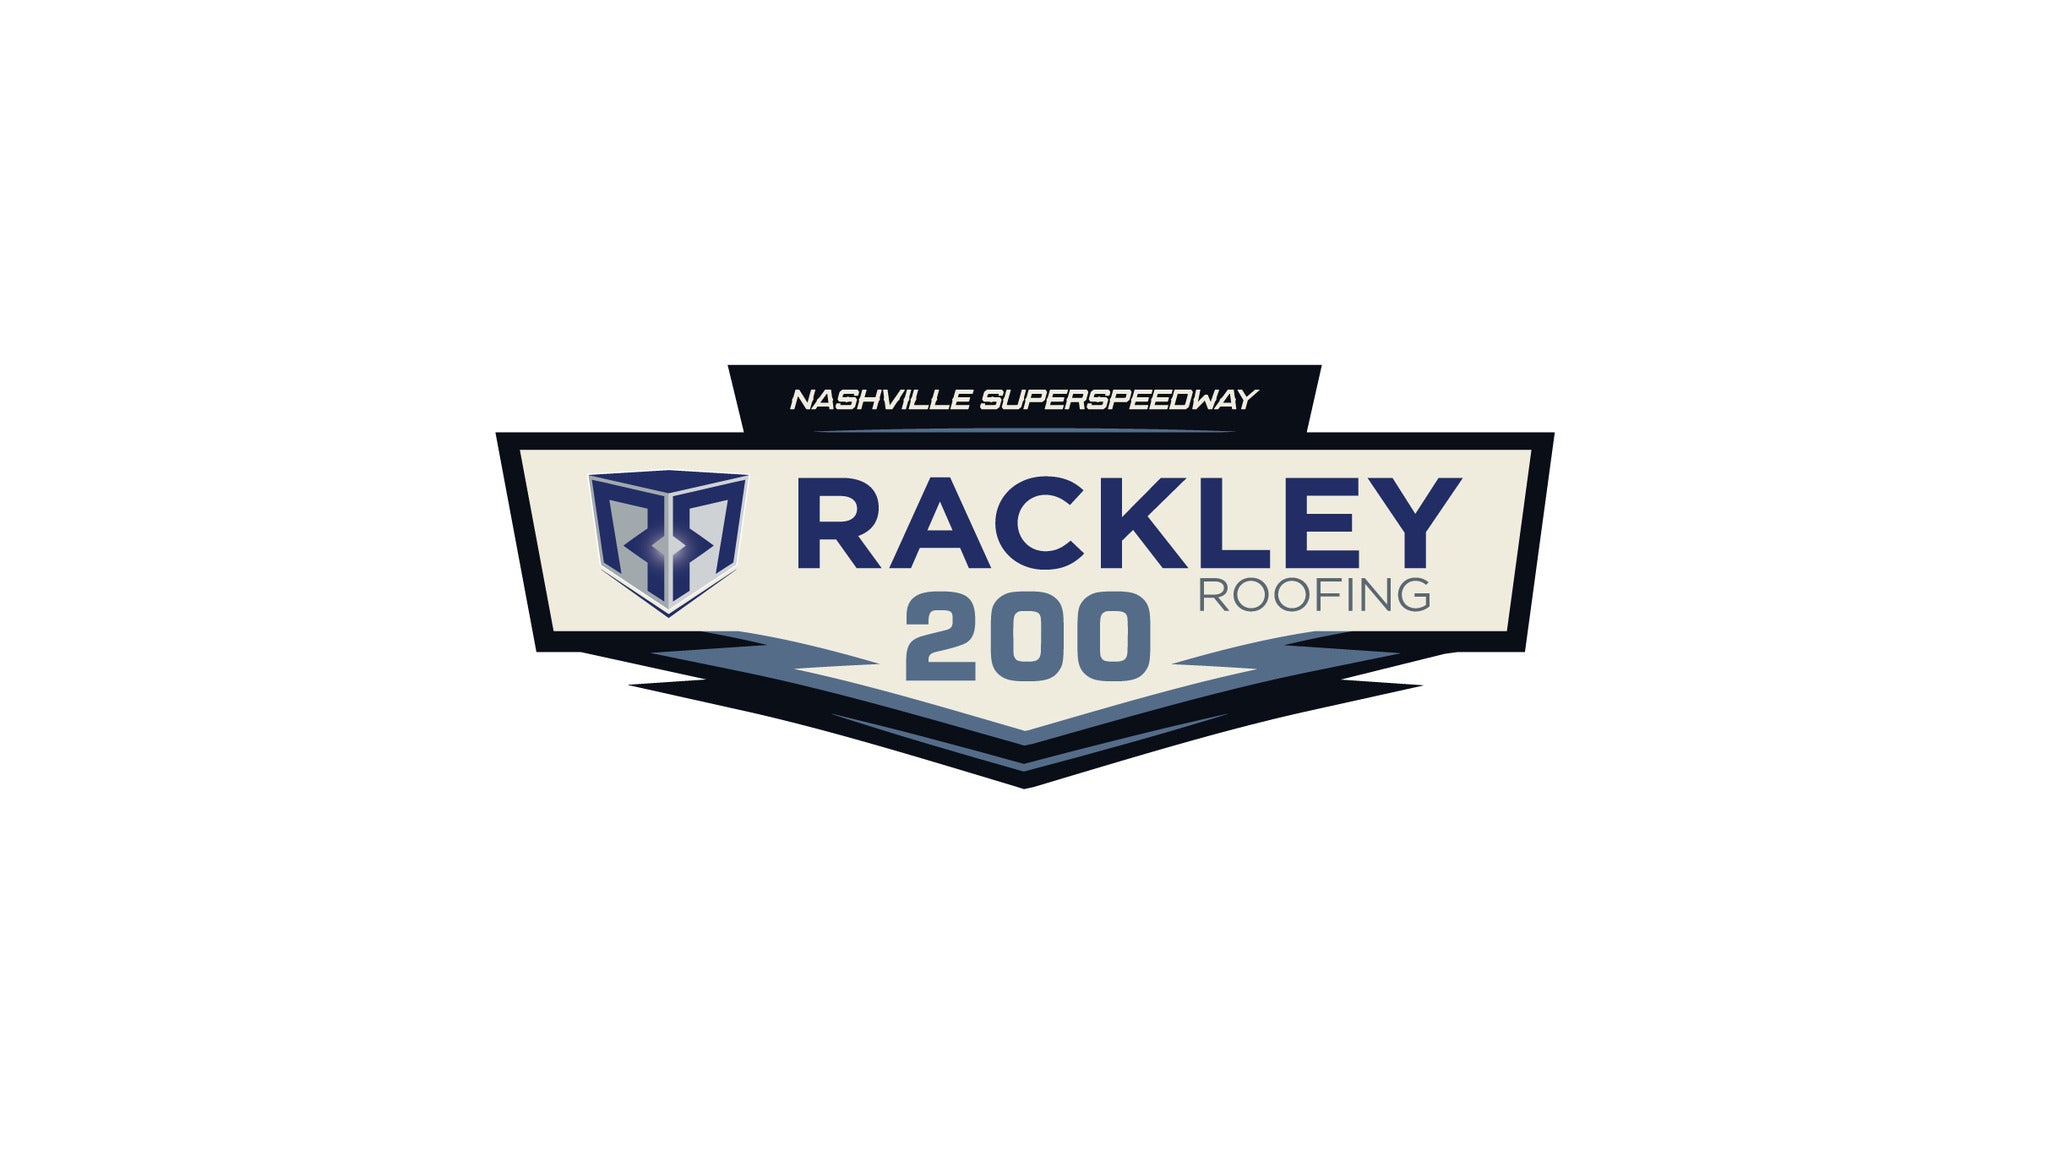 Rackley Roofing 200 presale information on freepresalepasswords.com